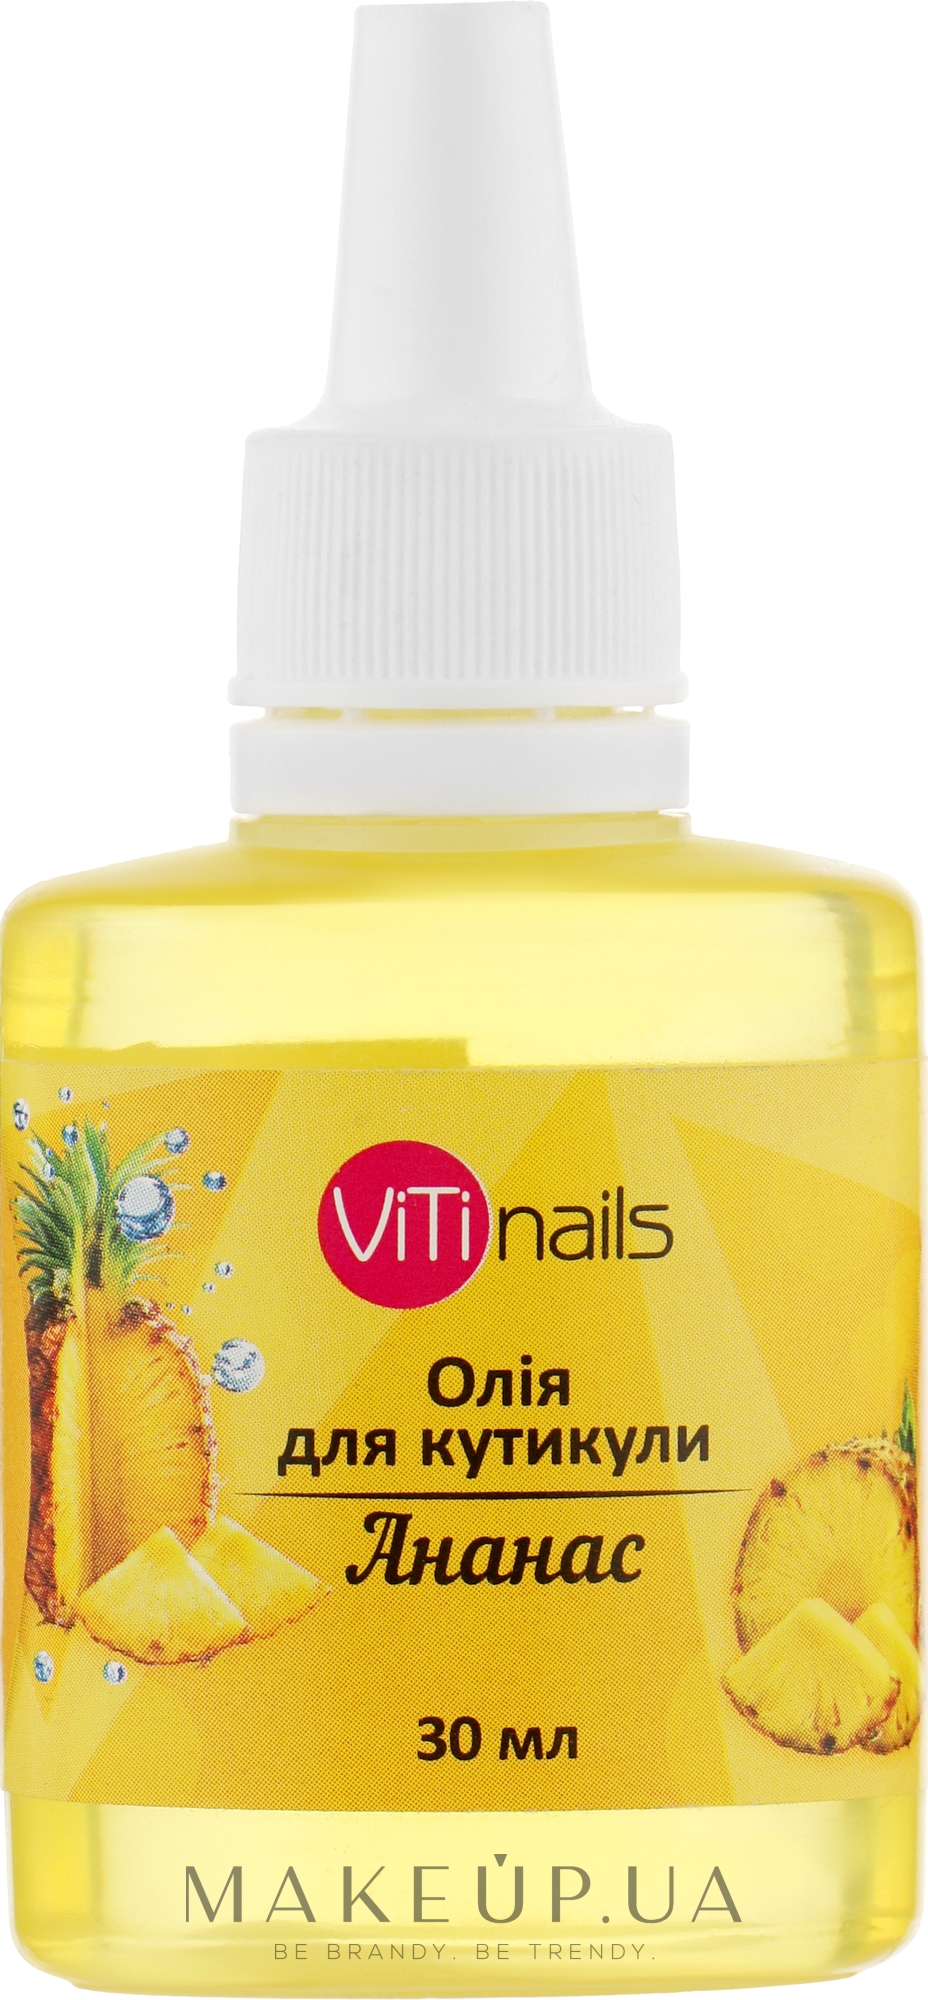 Масло для кутикулы "Ананас" - ViTinails  — фото 30ml